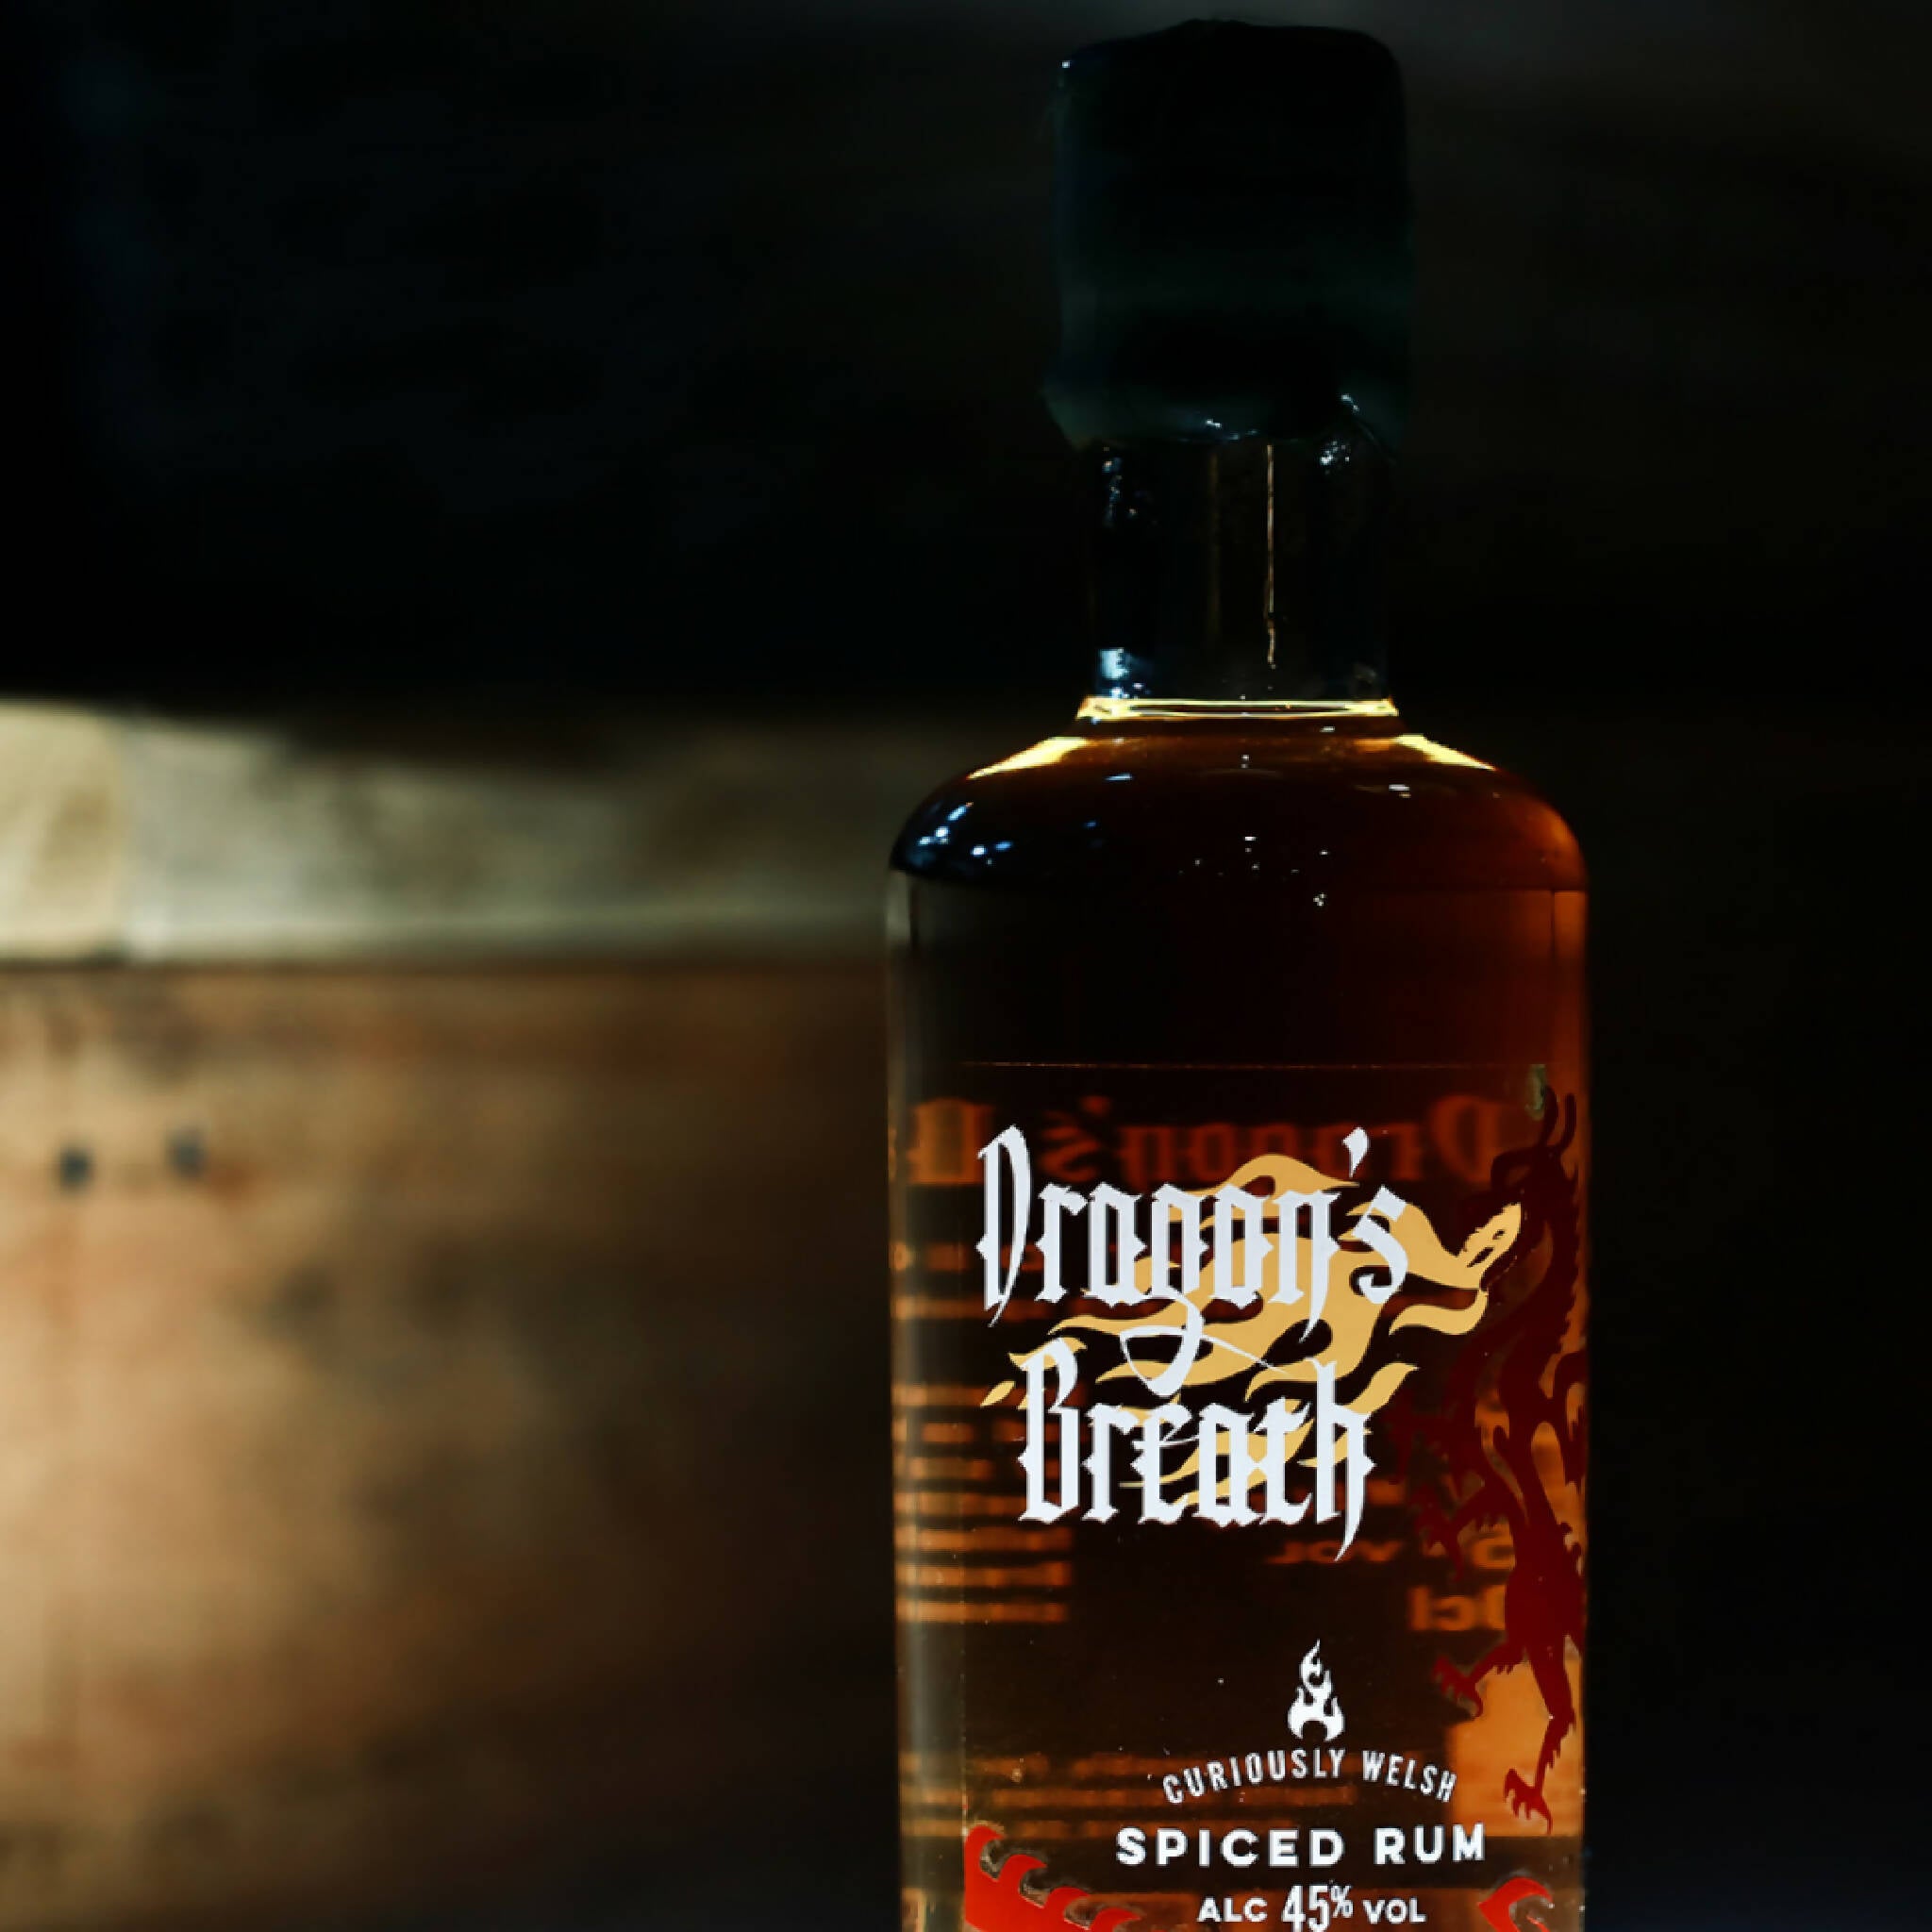 Dragon's Breath Spiced Welsh Rum